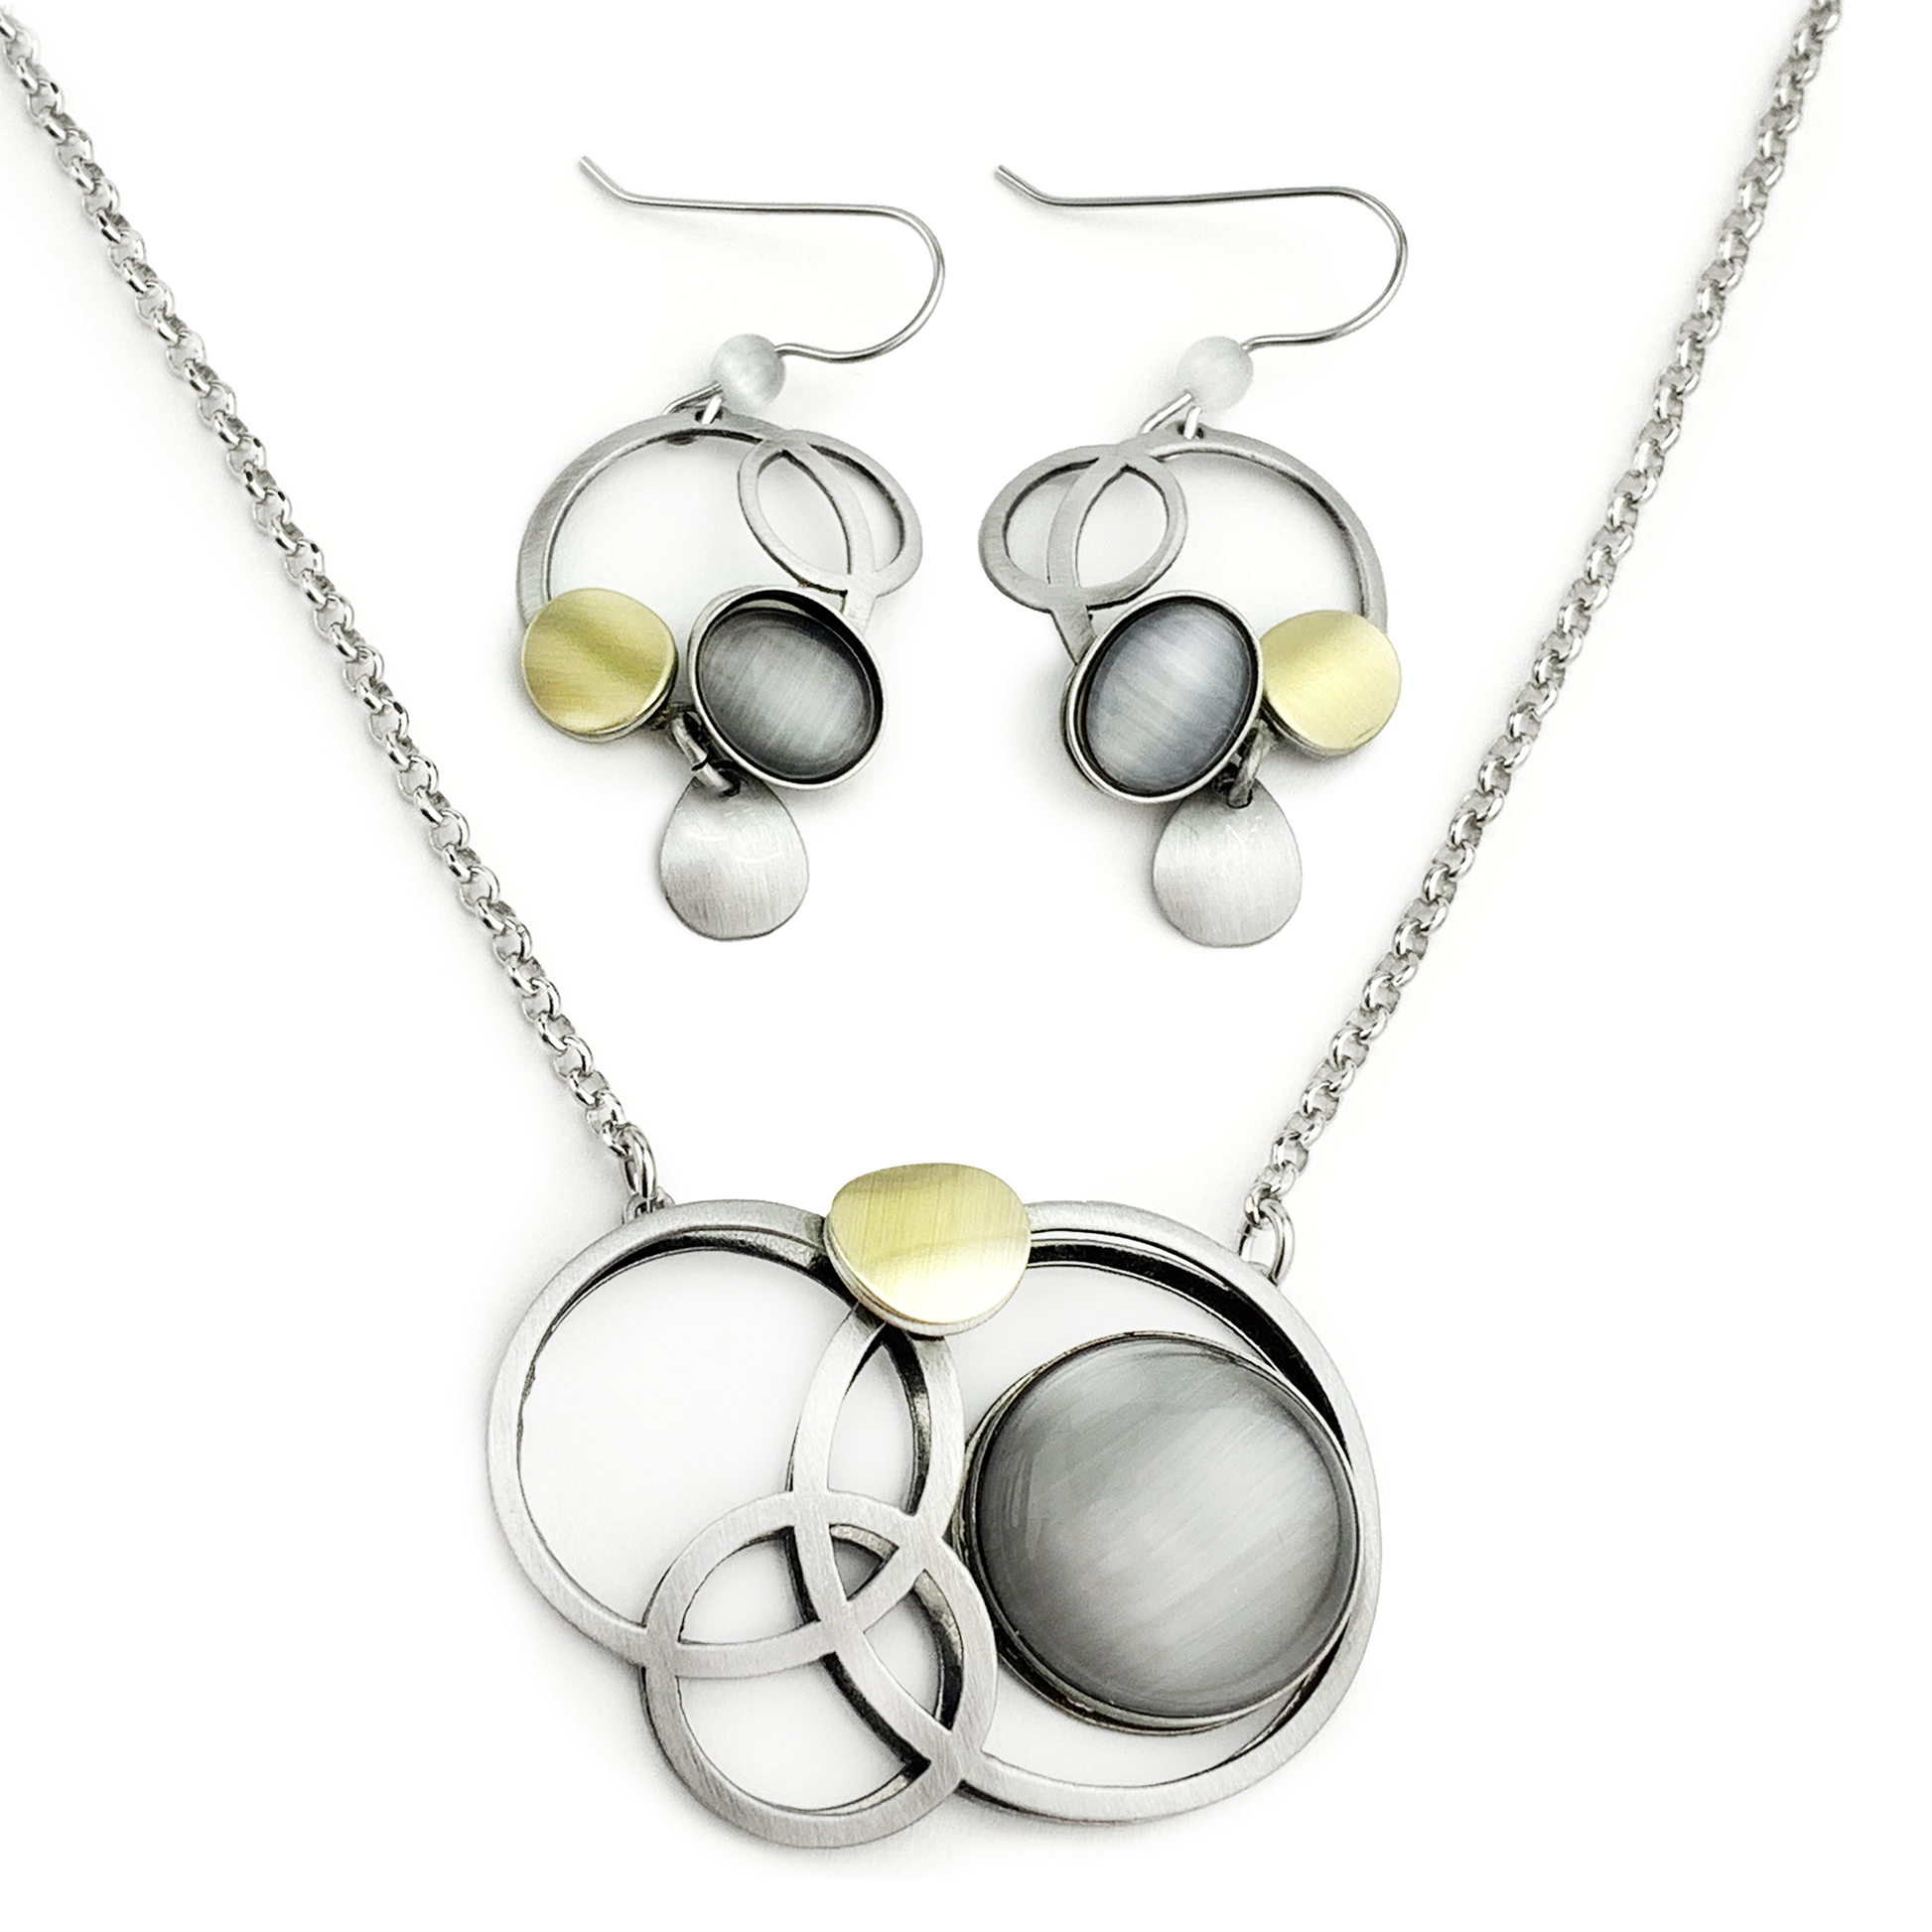 Crono Design, Pendant Necklace With Grey Stone